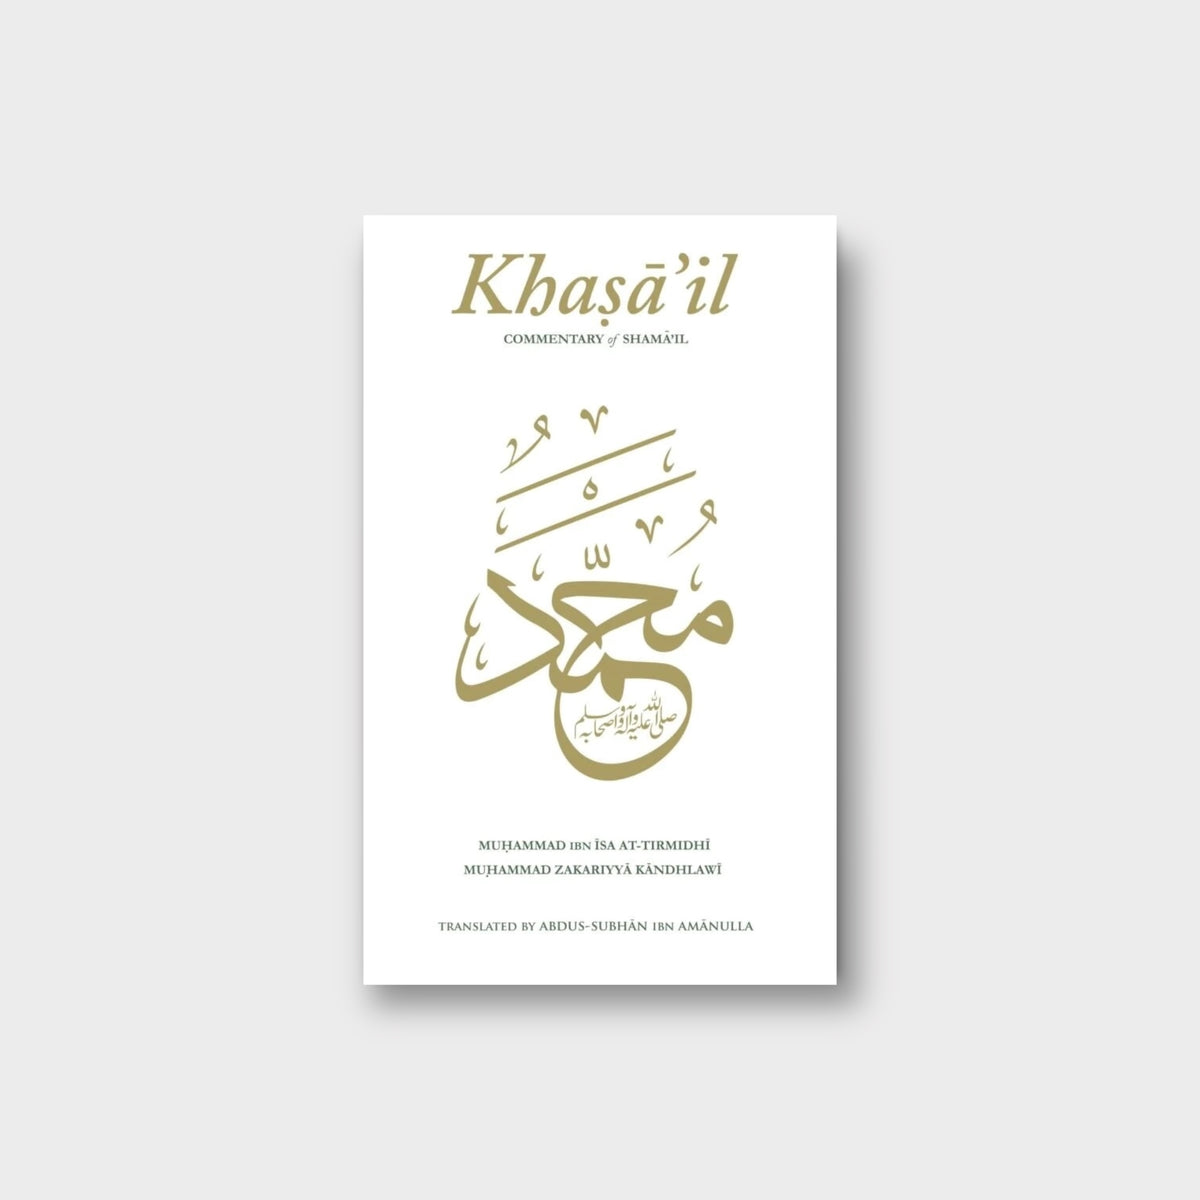 Khasail: Commentary of Shama’il